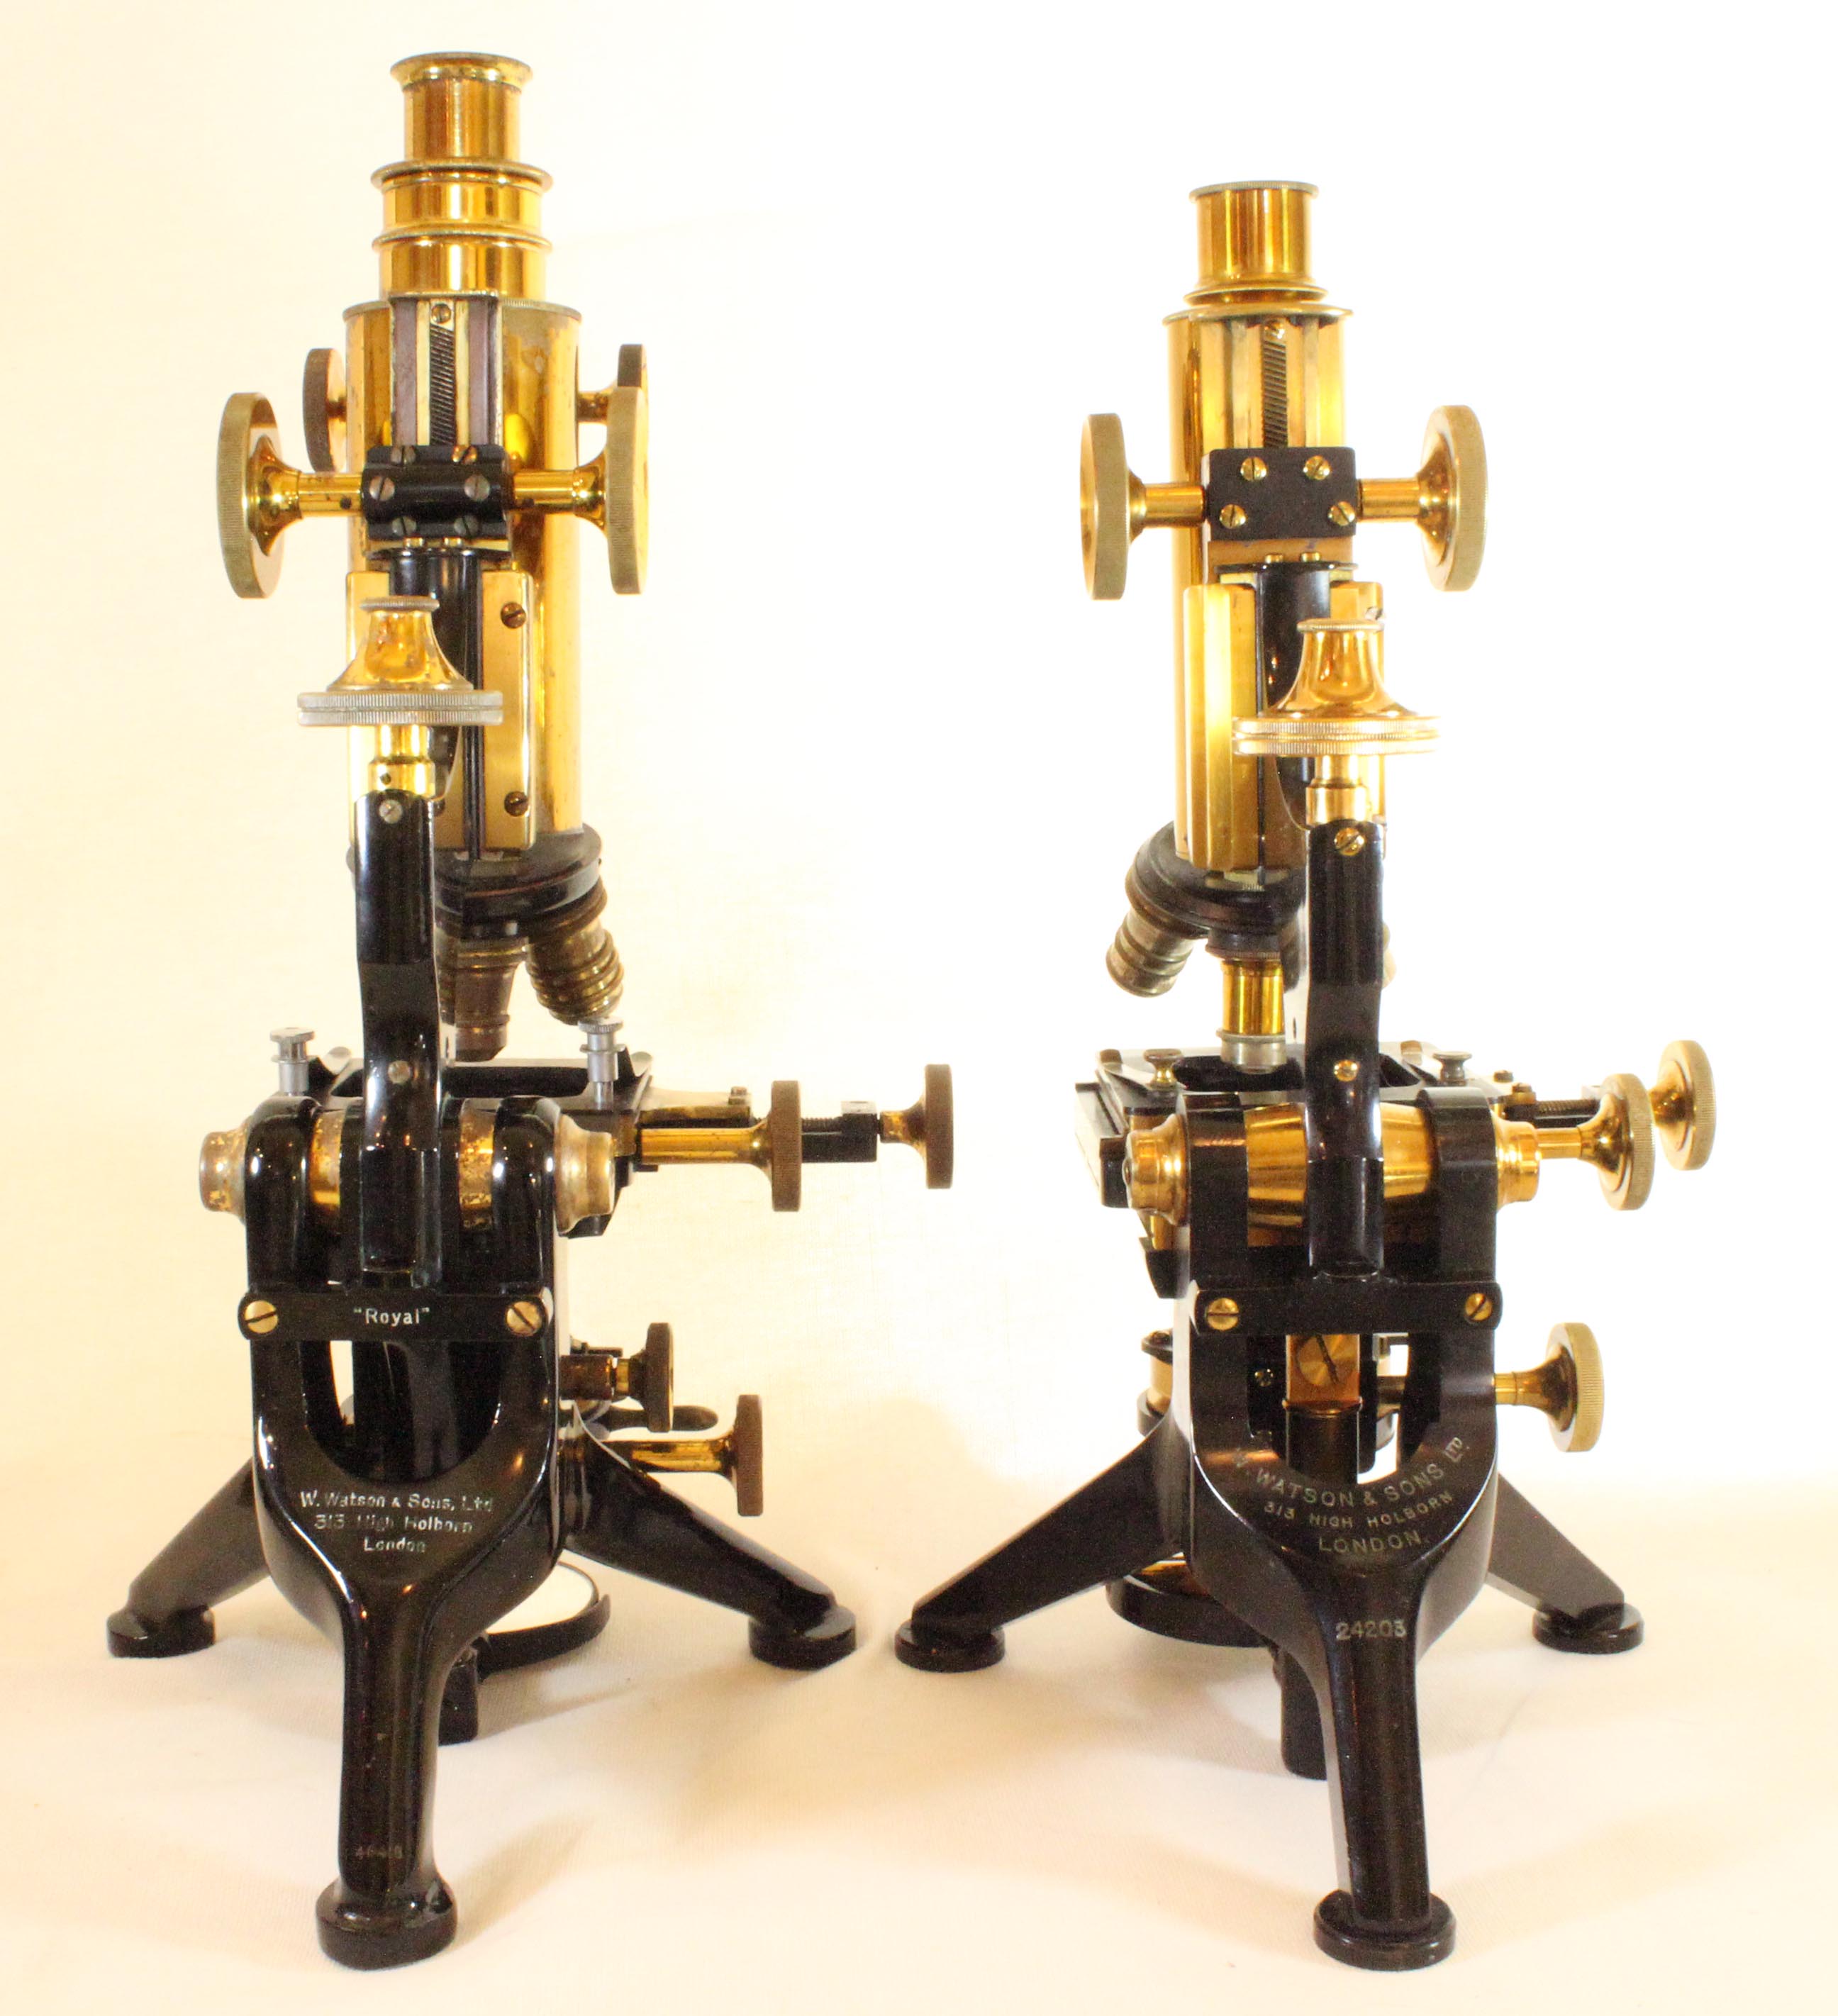 Edinburgh Model H and Royal microscopes